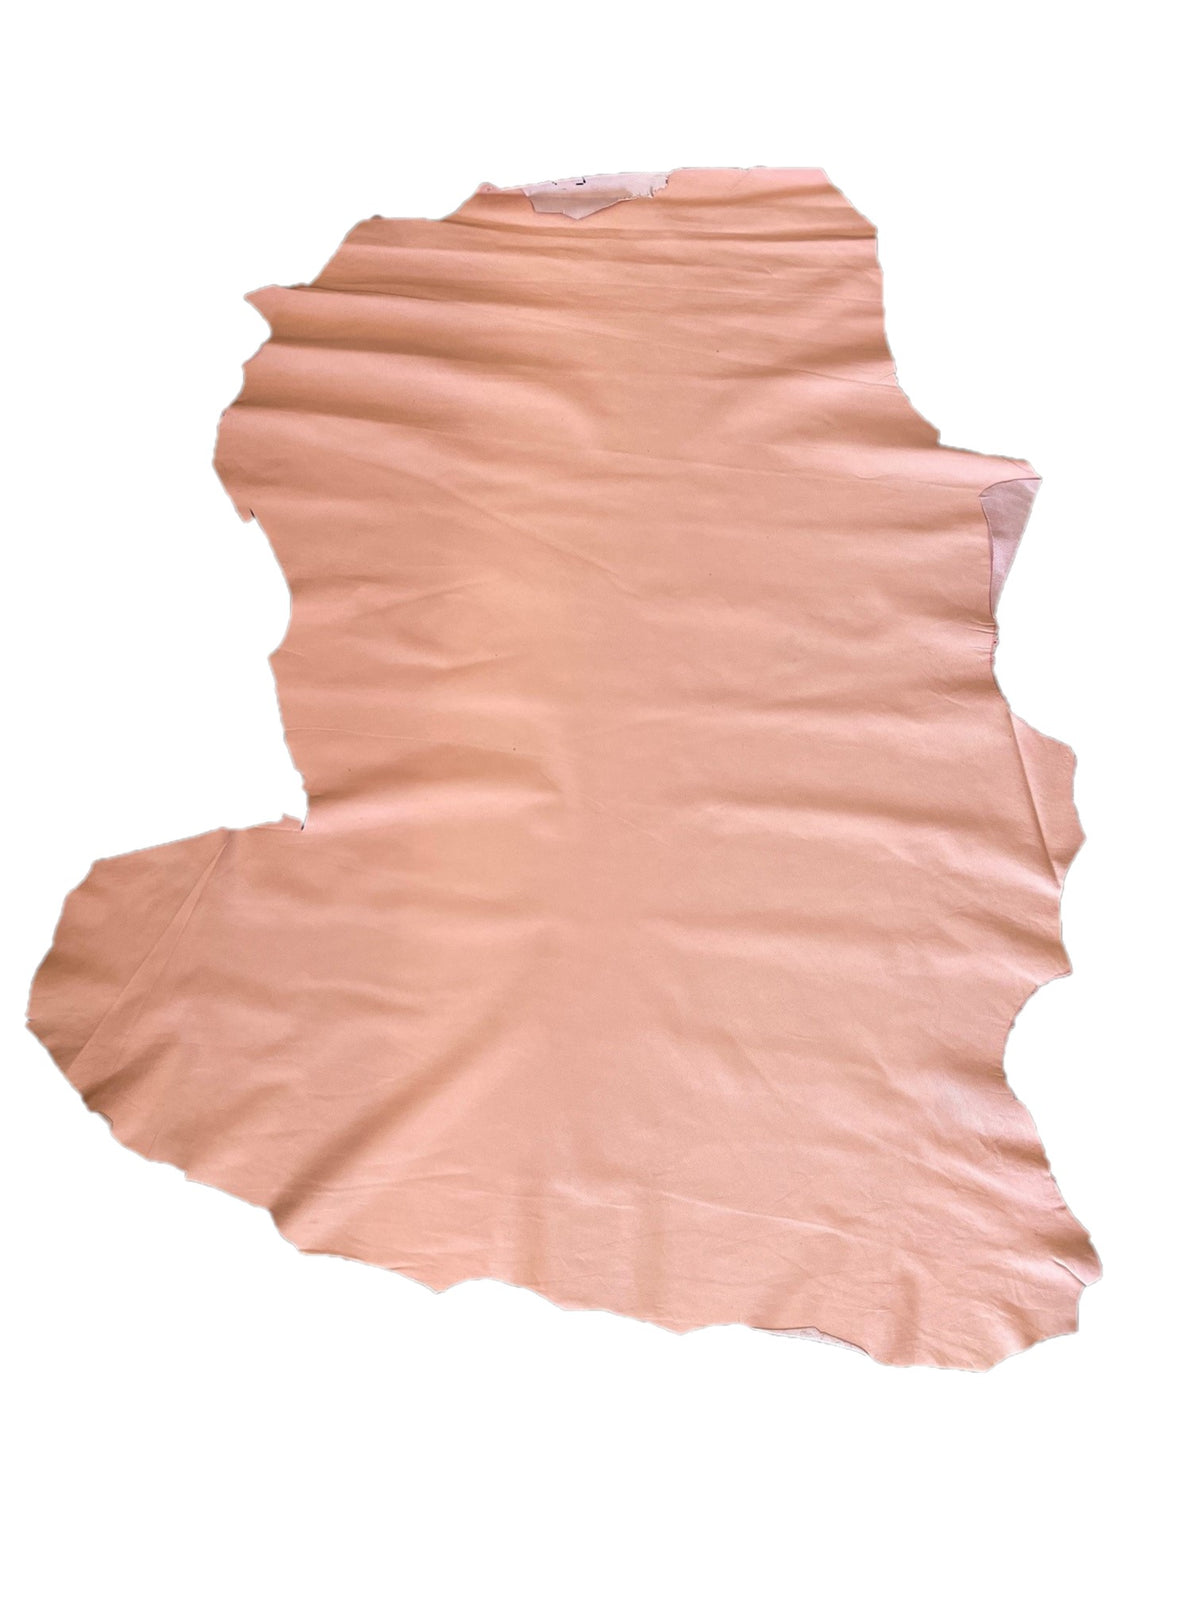 Textured Lamb Skin (Special) | Pink | 0.6mm | 6 sq.ft | $30 ea.